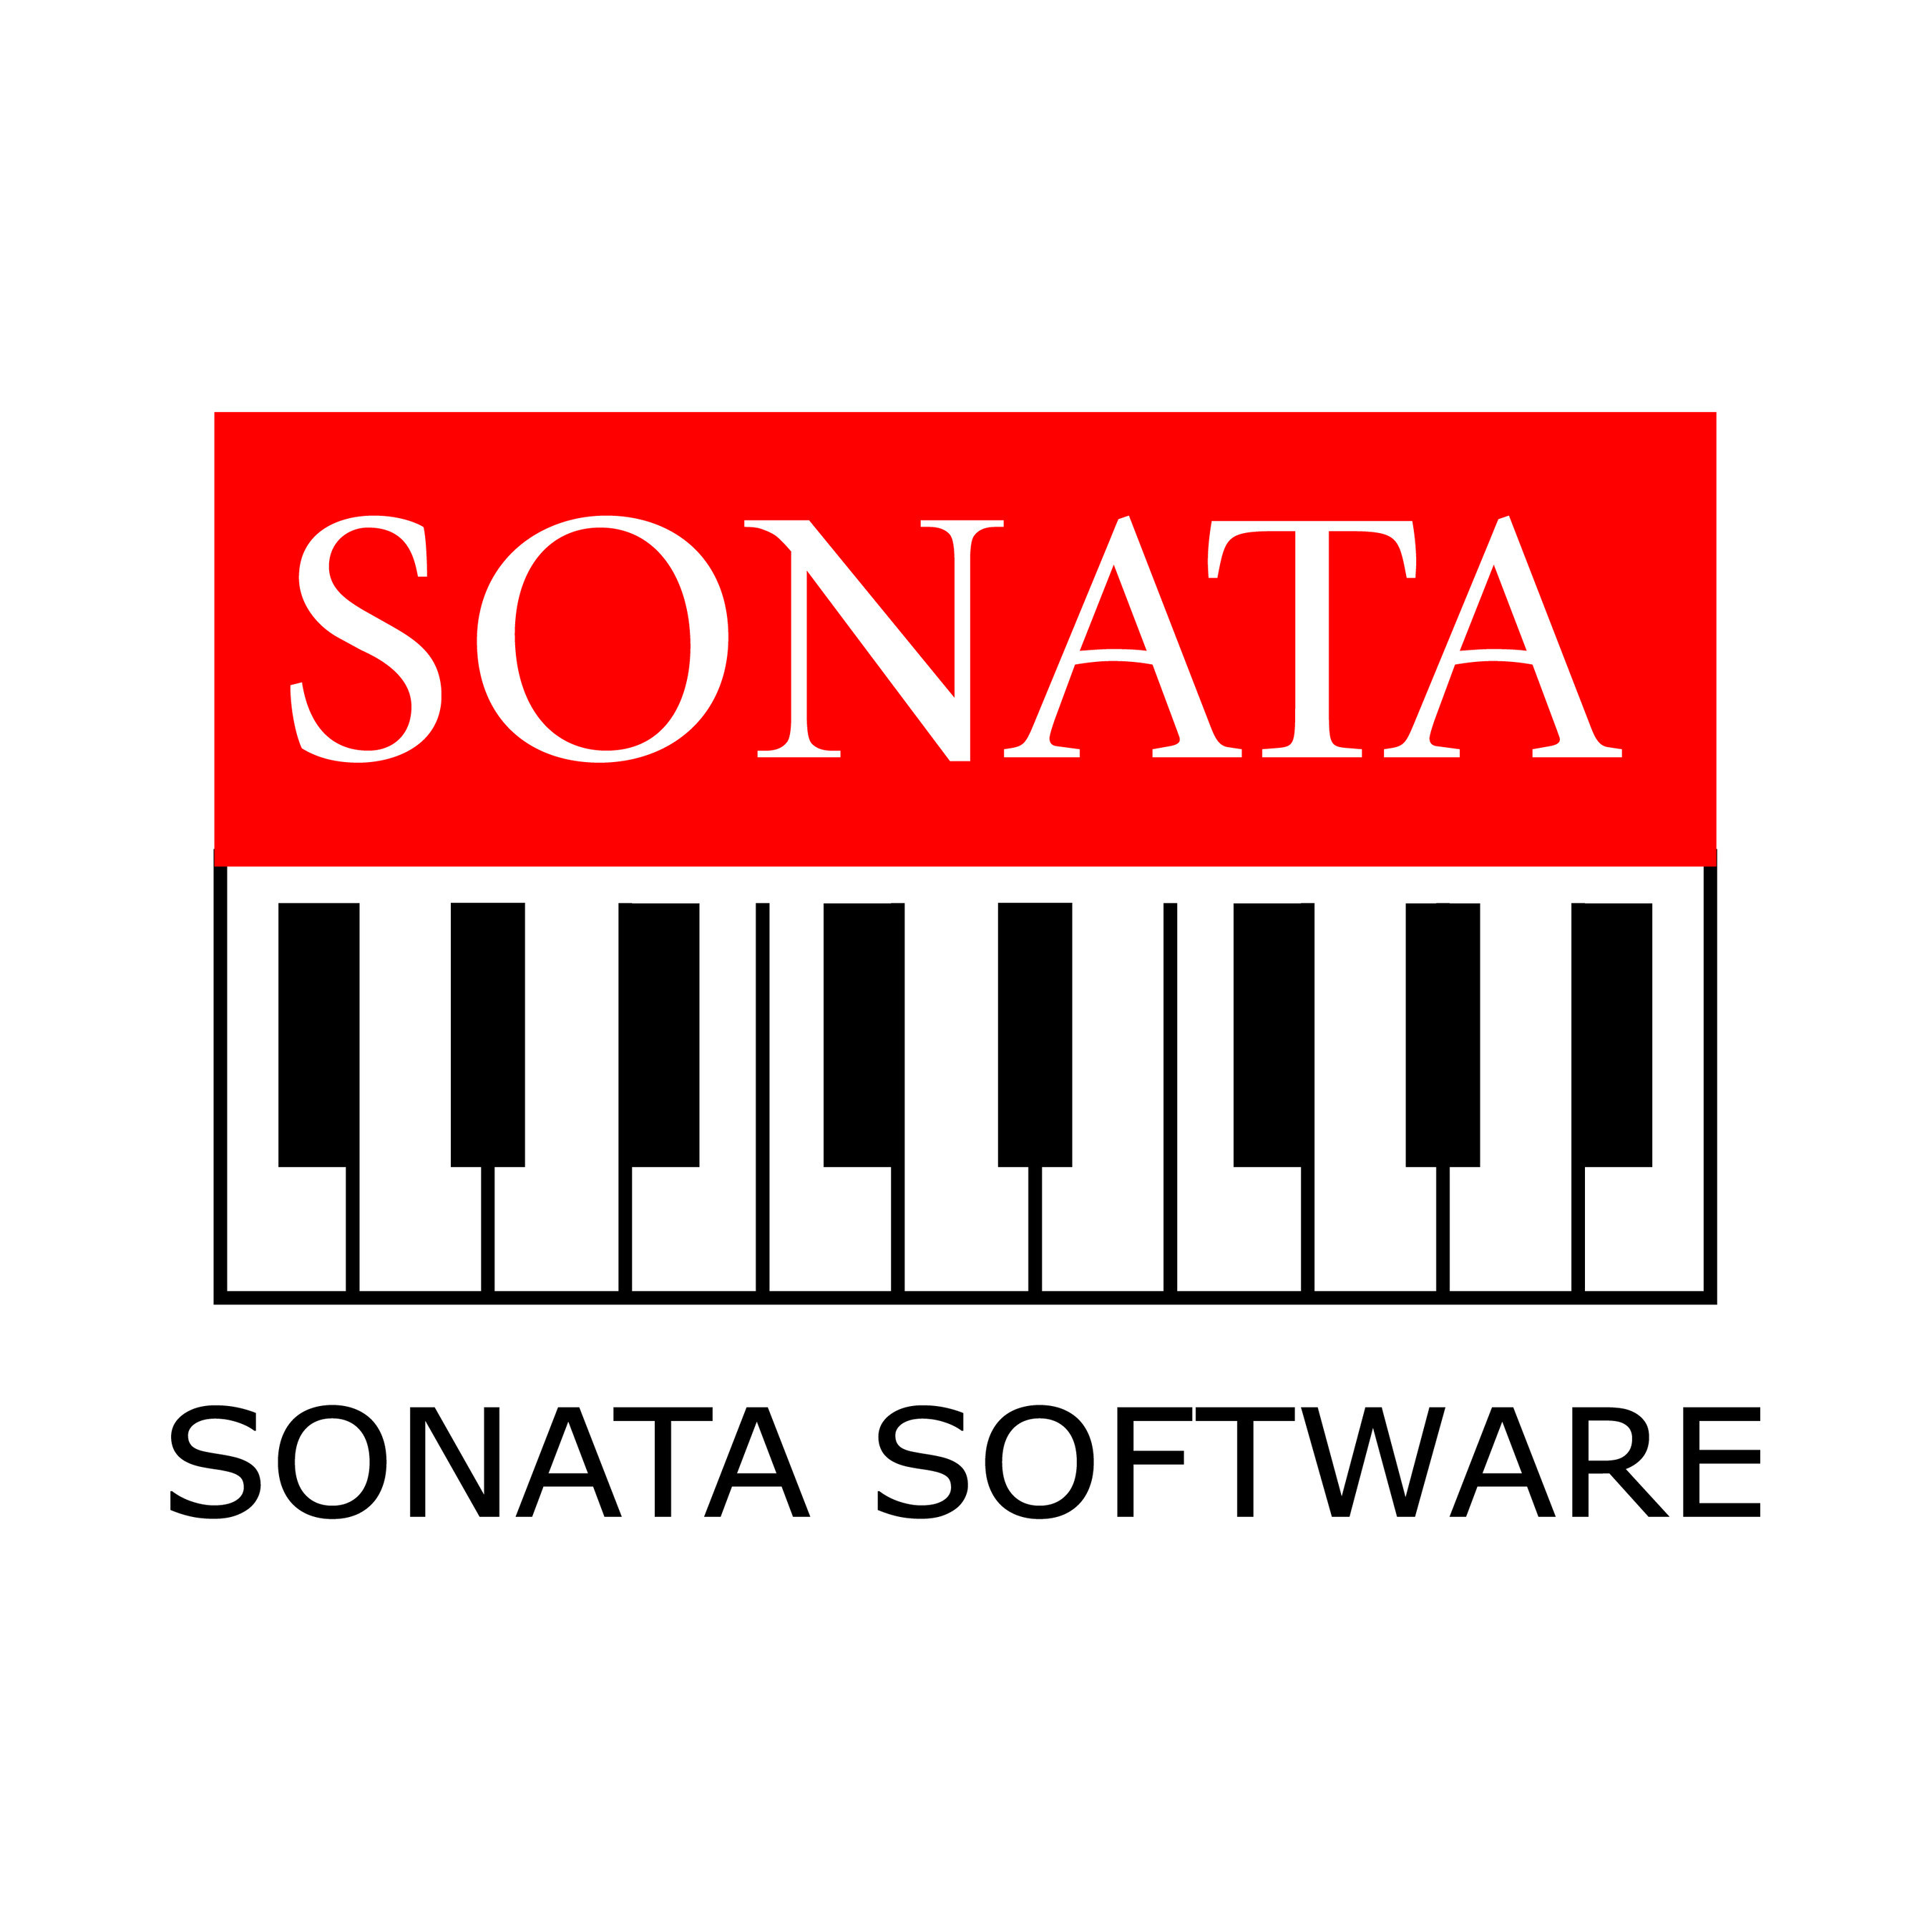 Sonata Software's unique 'Platformation' strategy for Digital